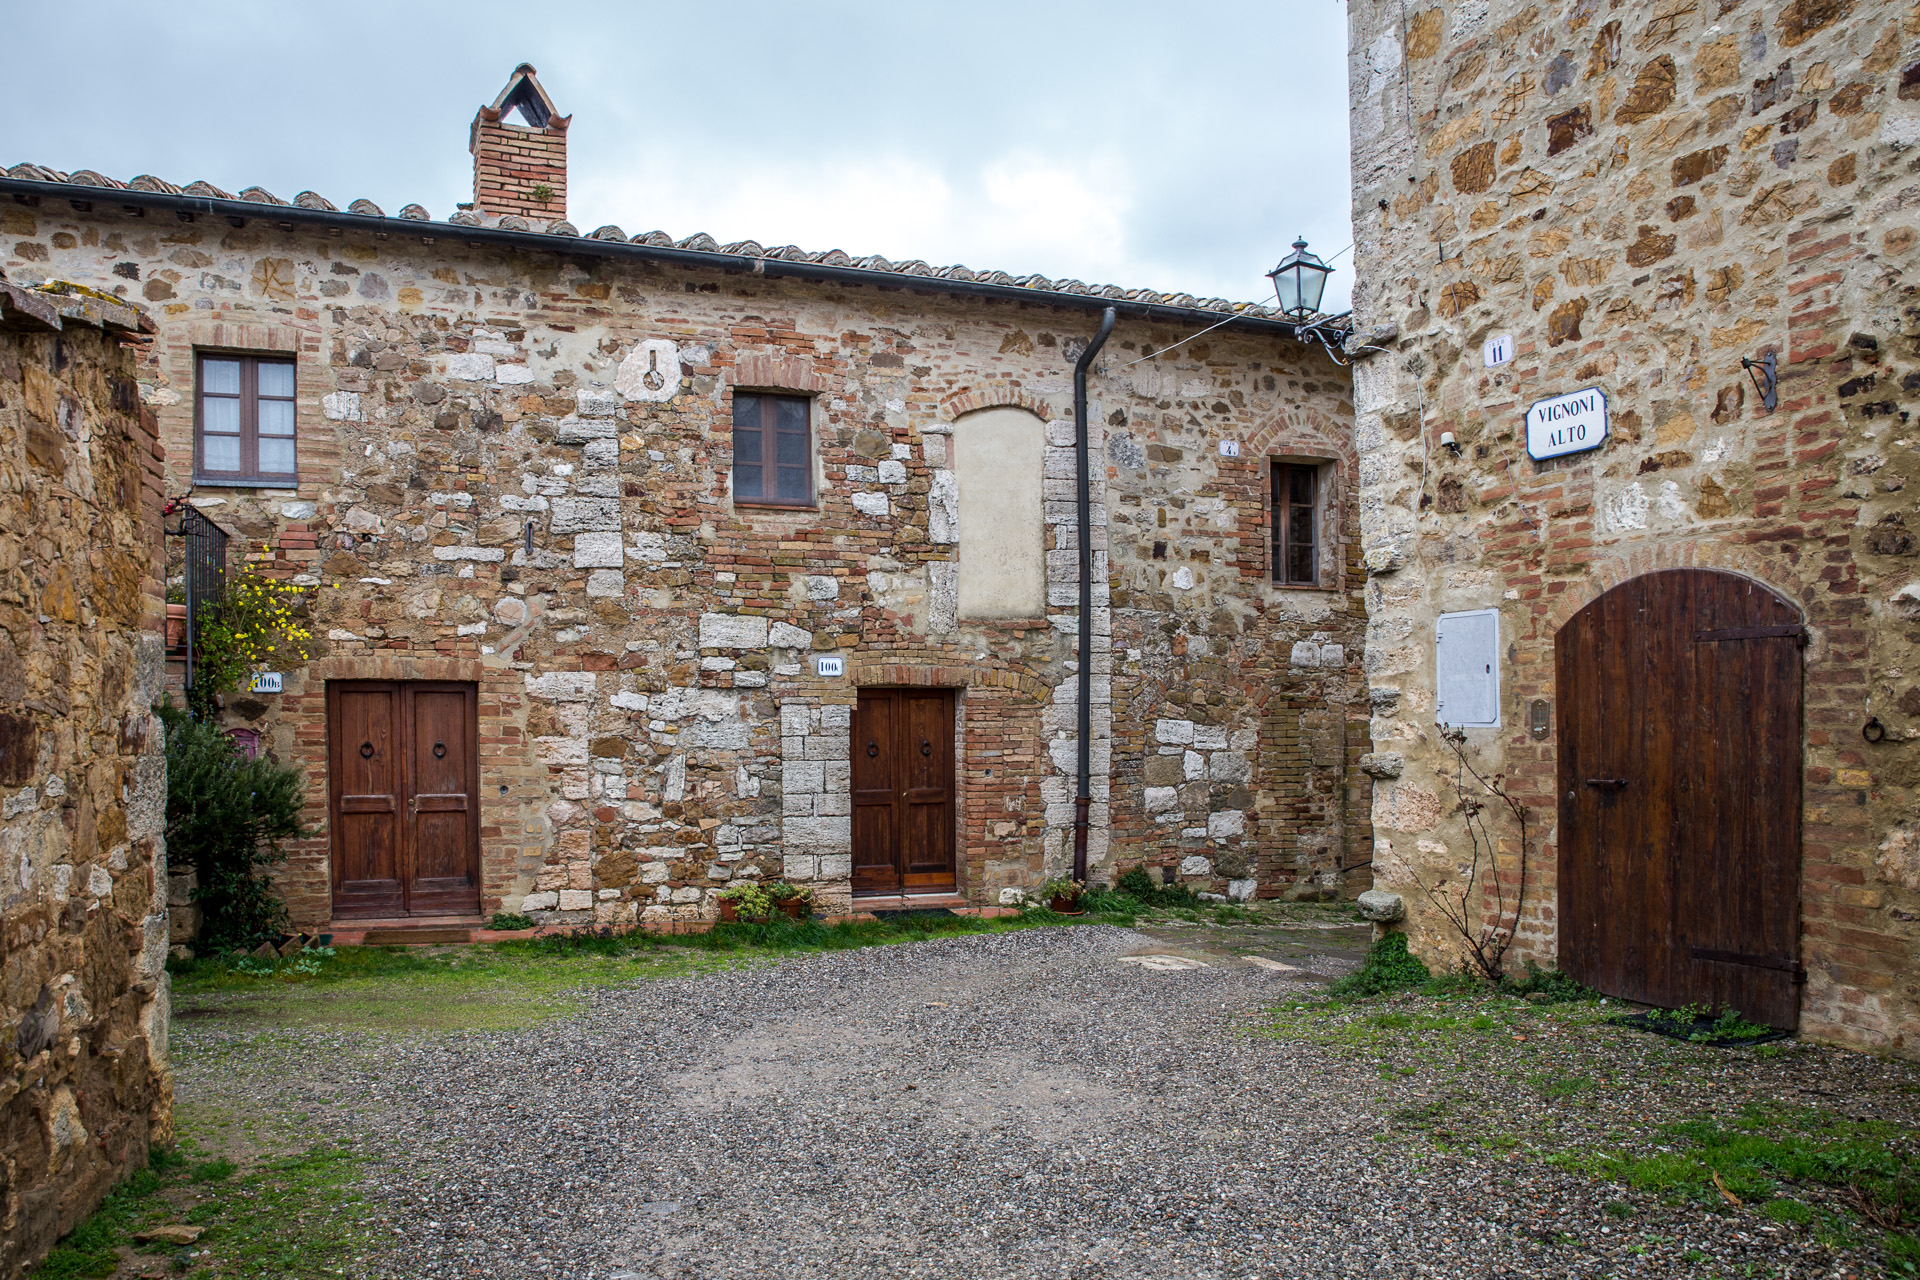 Vignoni Alto houses